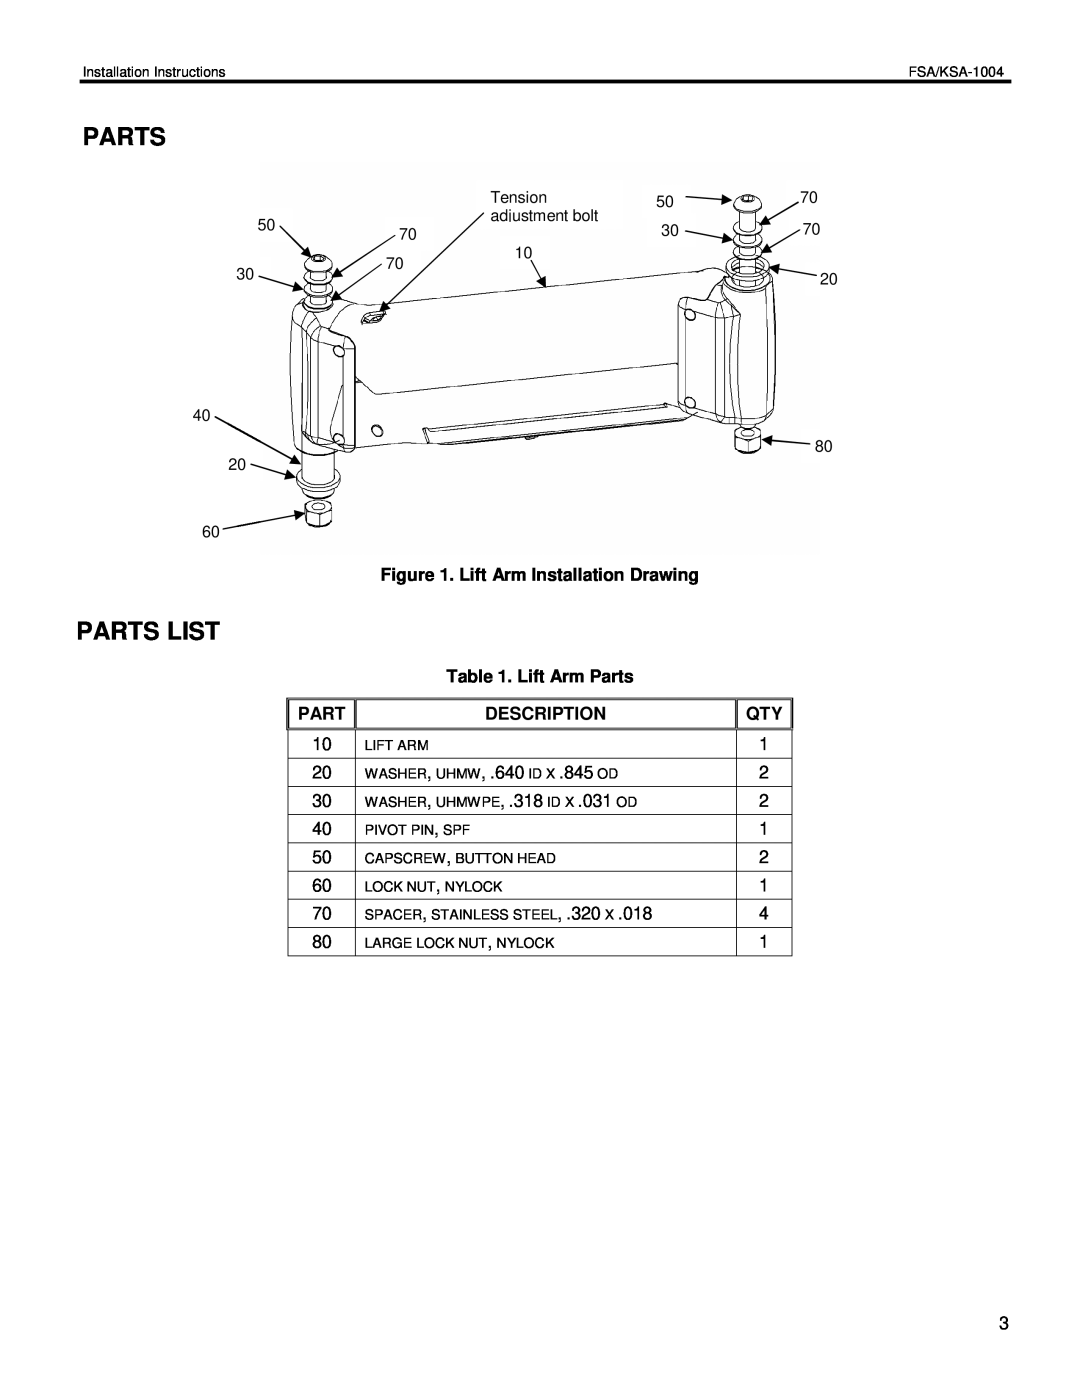 Chief Manufacturing KSA-1004, FSA-1004 Parts List, Lift Arm Installation Drawing, Lift Arm Parts, Description 